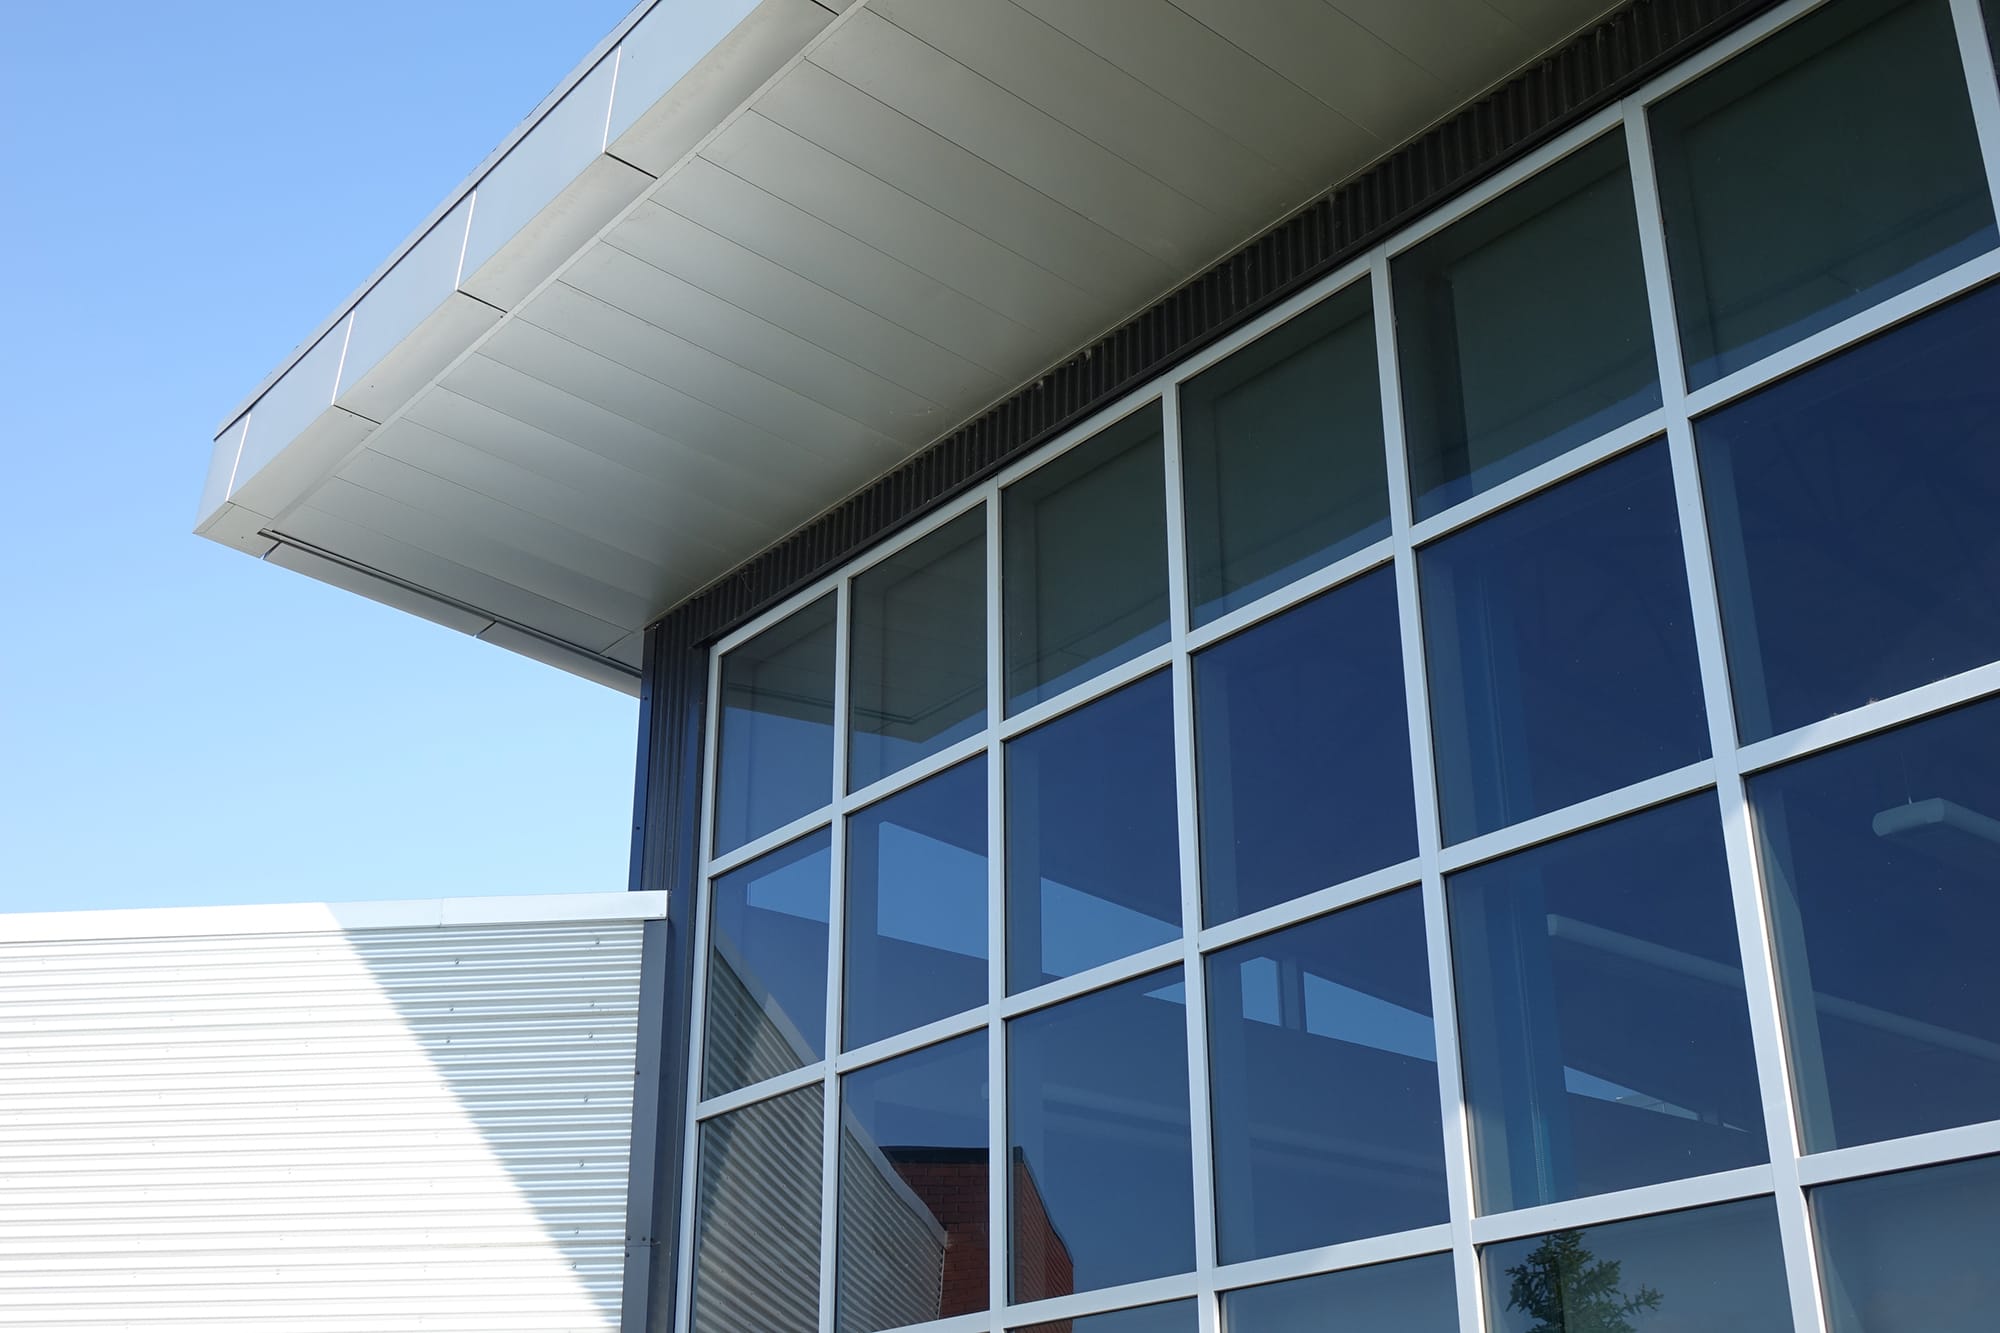 Clairmont Community School and Wellington Resource Centre exterior windows